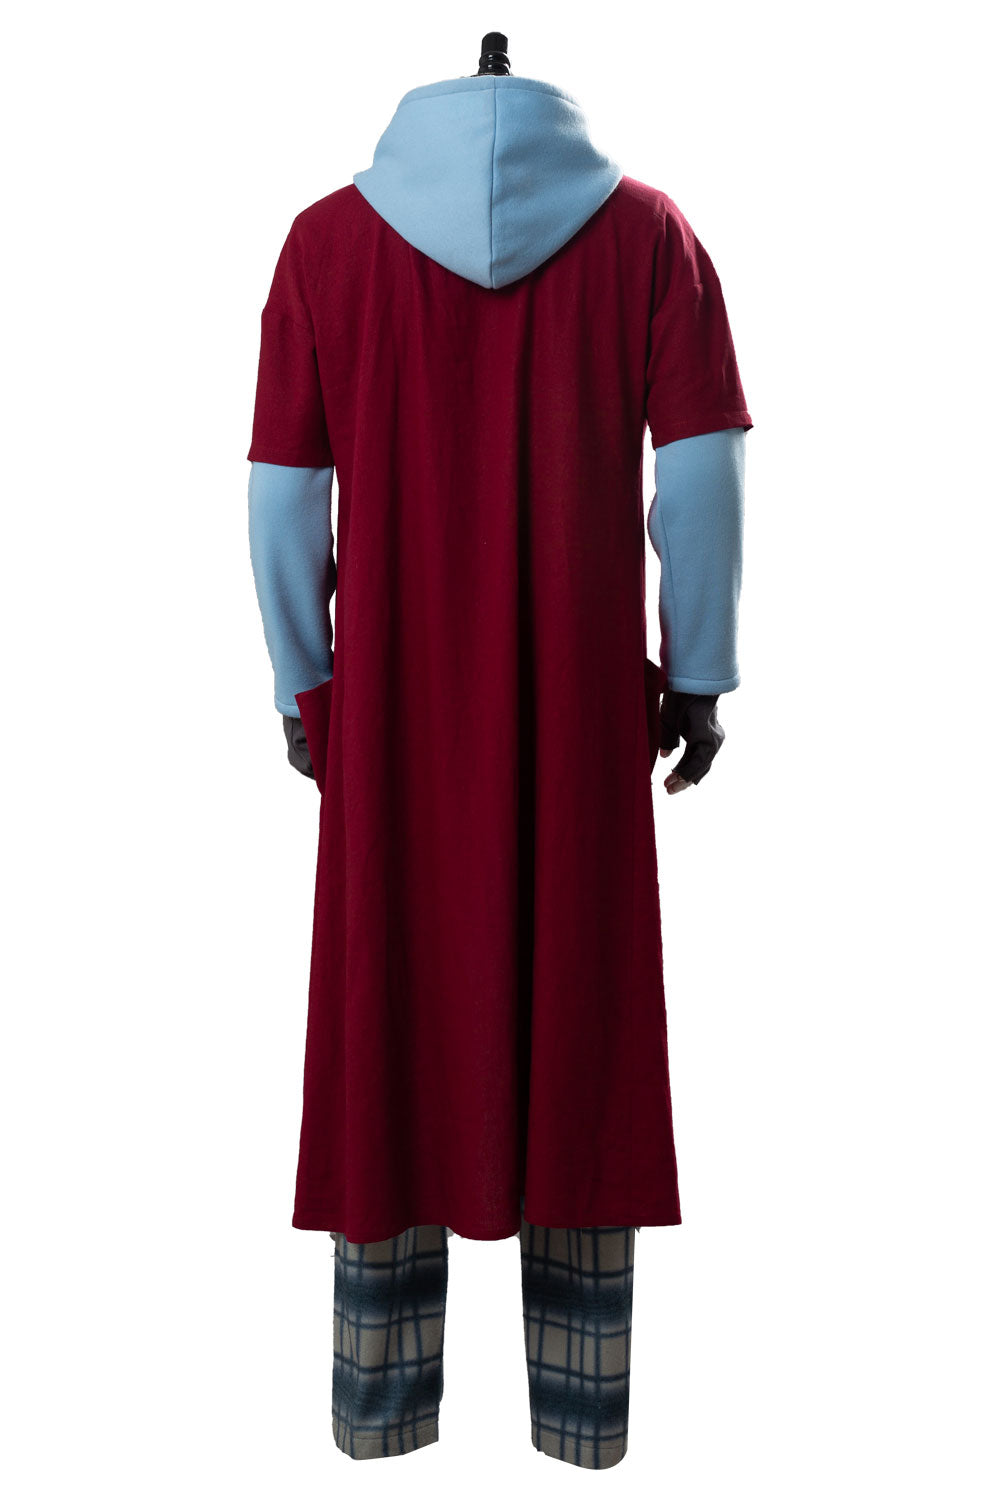 Avengers 4 Endgame Thor Fett Thor Cosplay Kostüm NEU Version Pyjama Schlafanzug